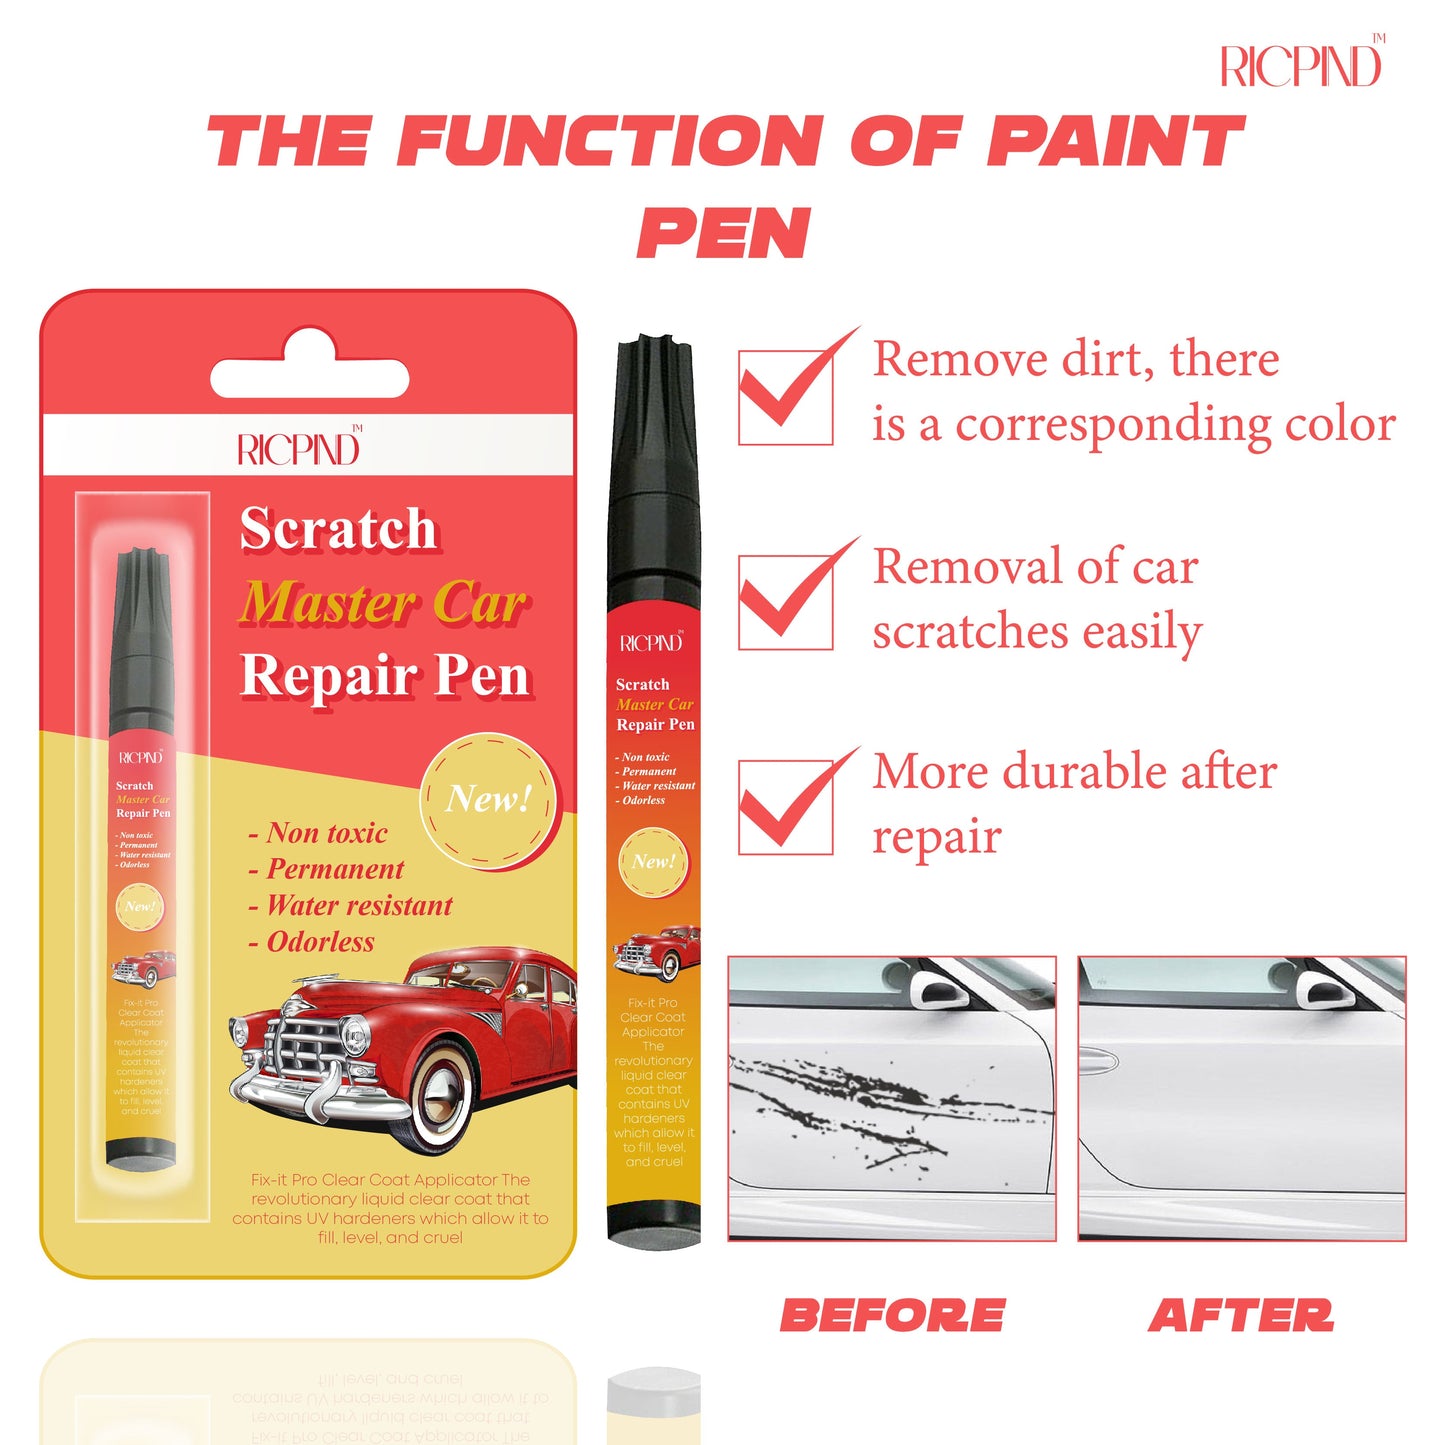 RICPIND ScratchMaster Car Repair Pen